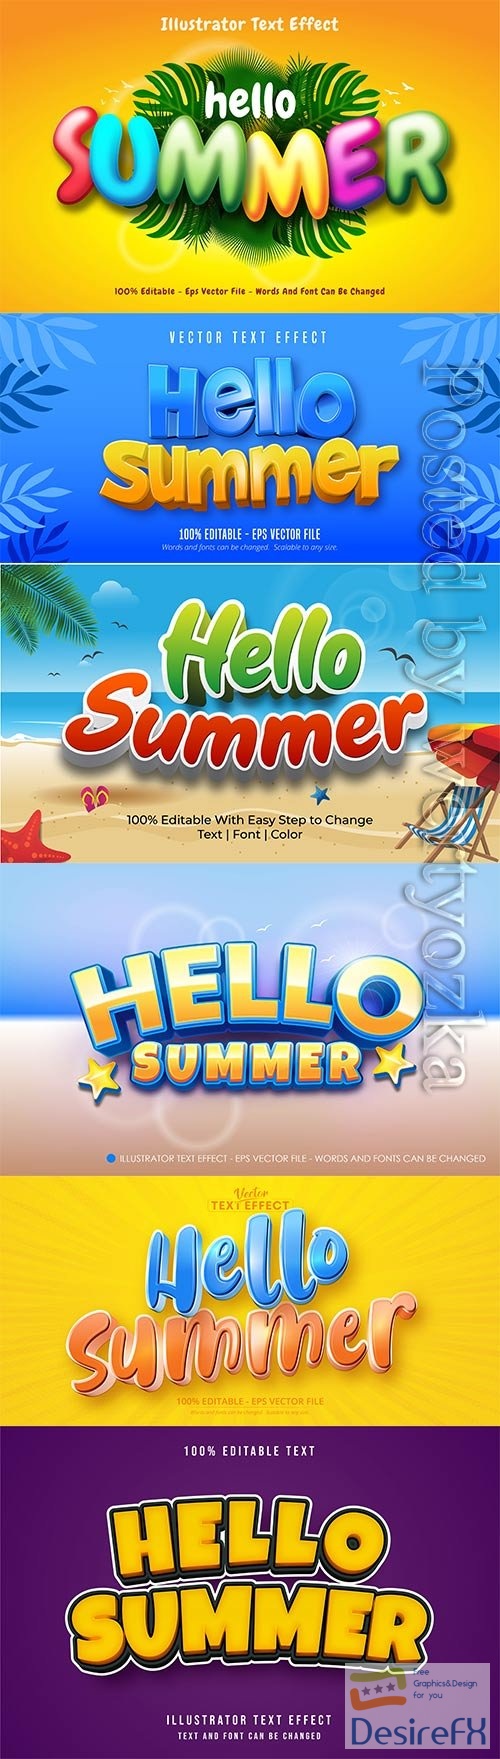 Editable text effect, hello summer style illustrations